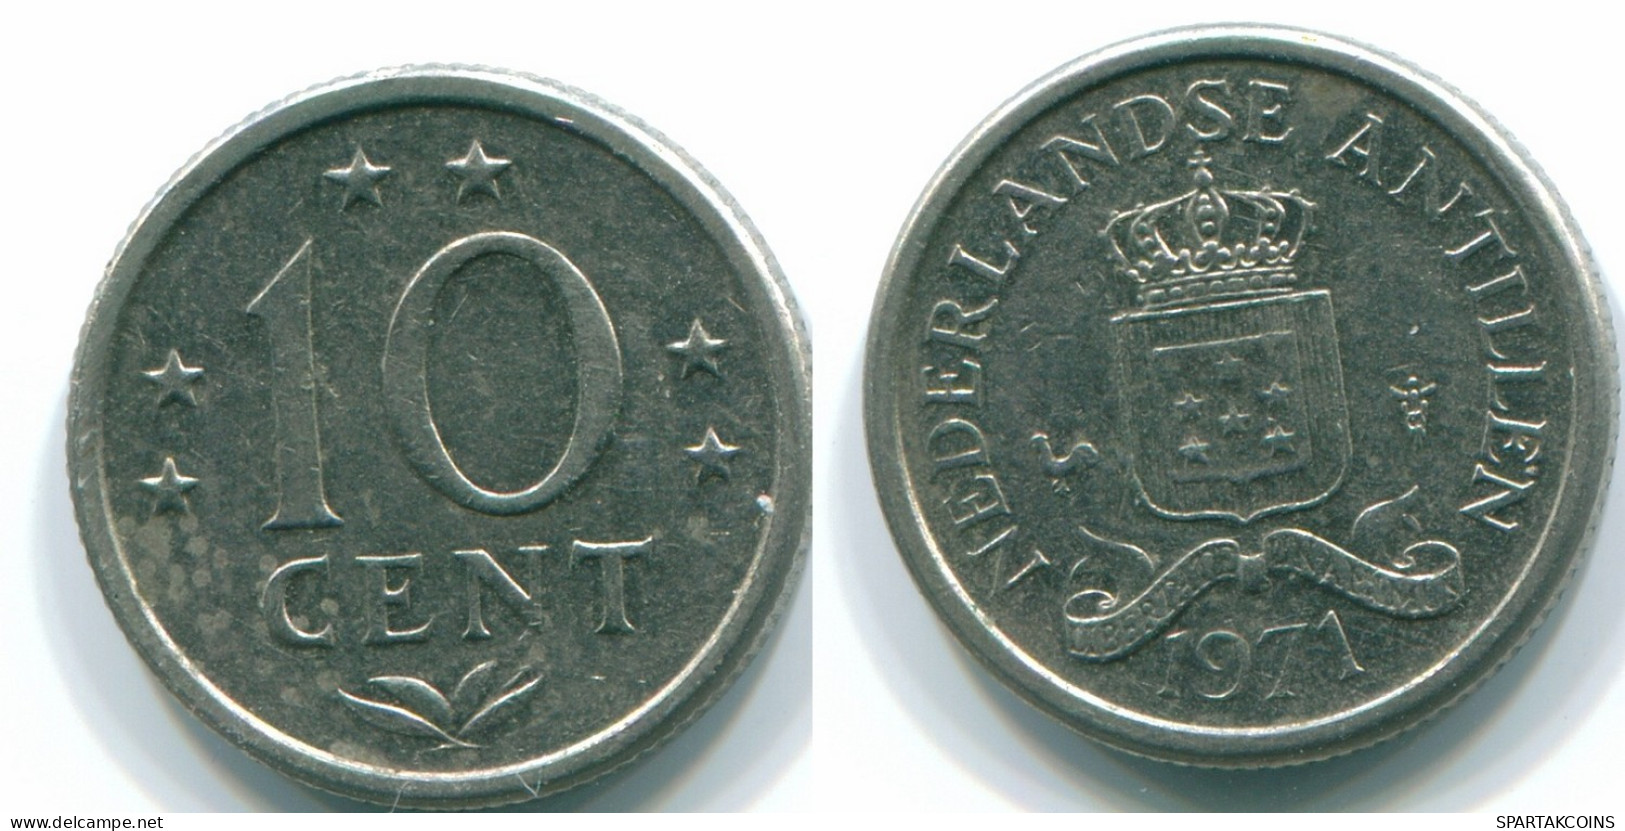 10 CENTS 1971 NETHERLANDS ANTILLES Nickel Colonial Coin #S13488.U.A - Nederlandse Antillen